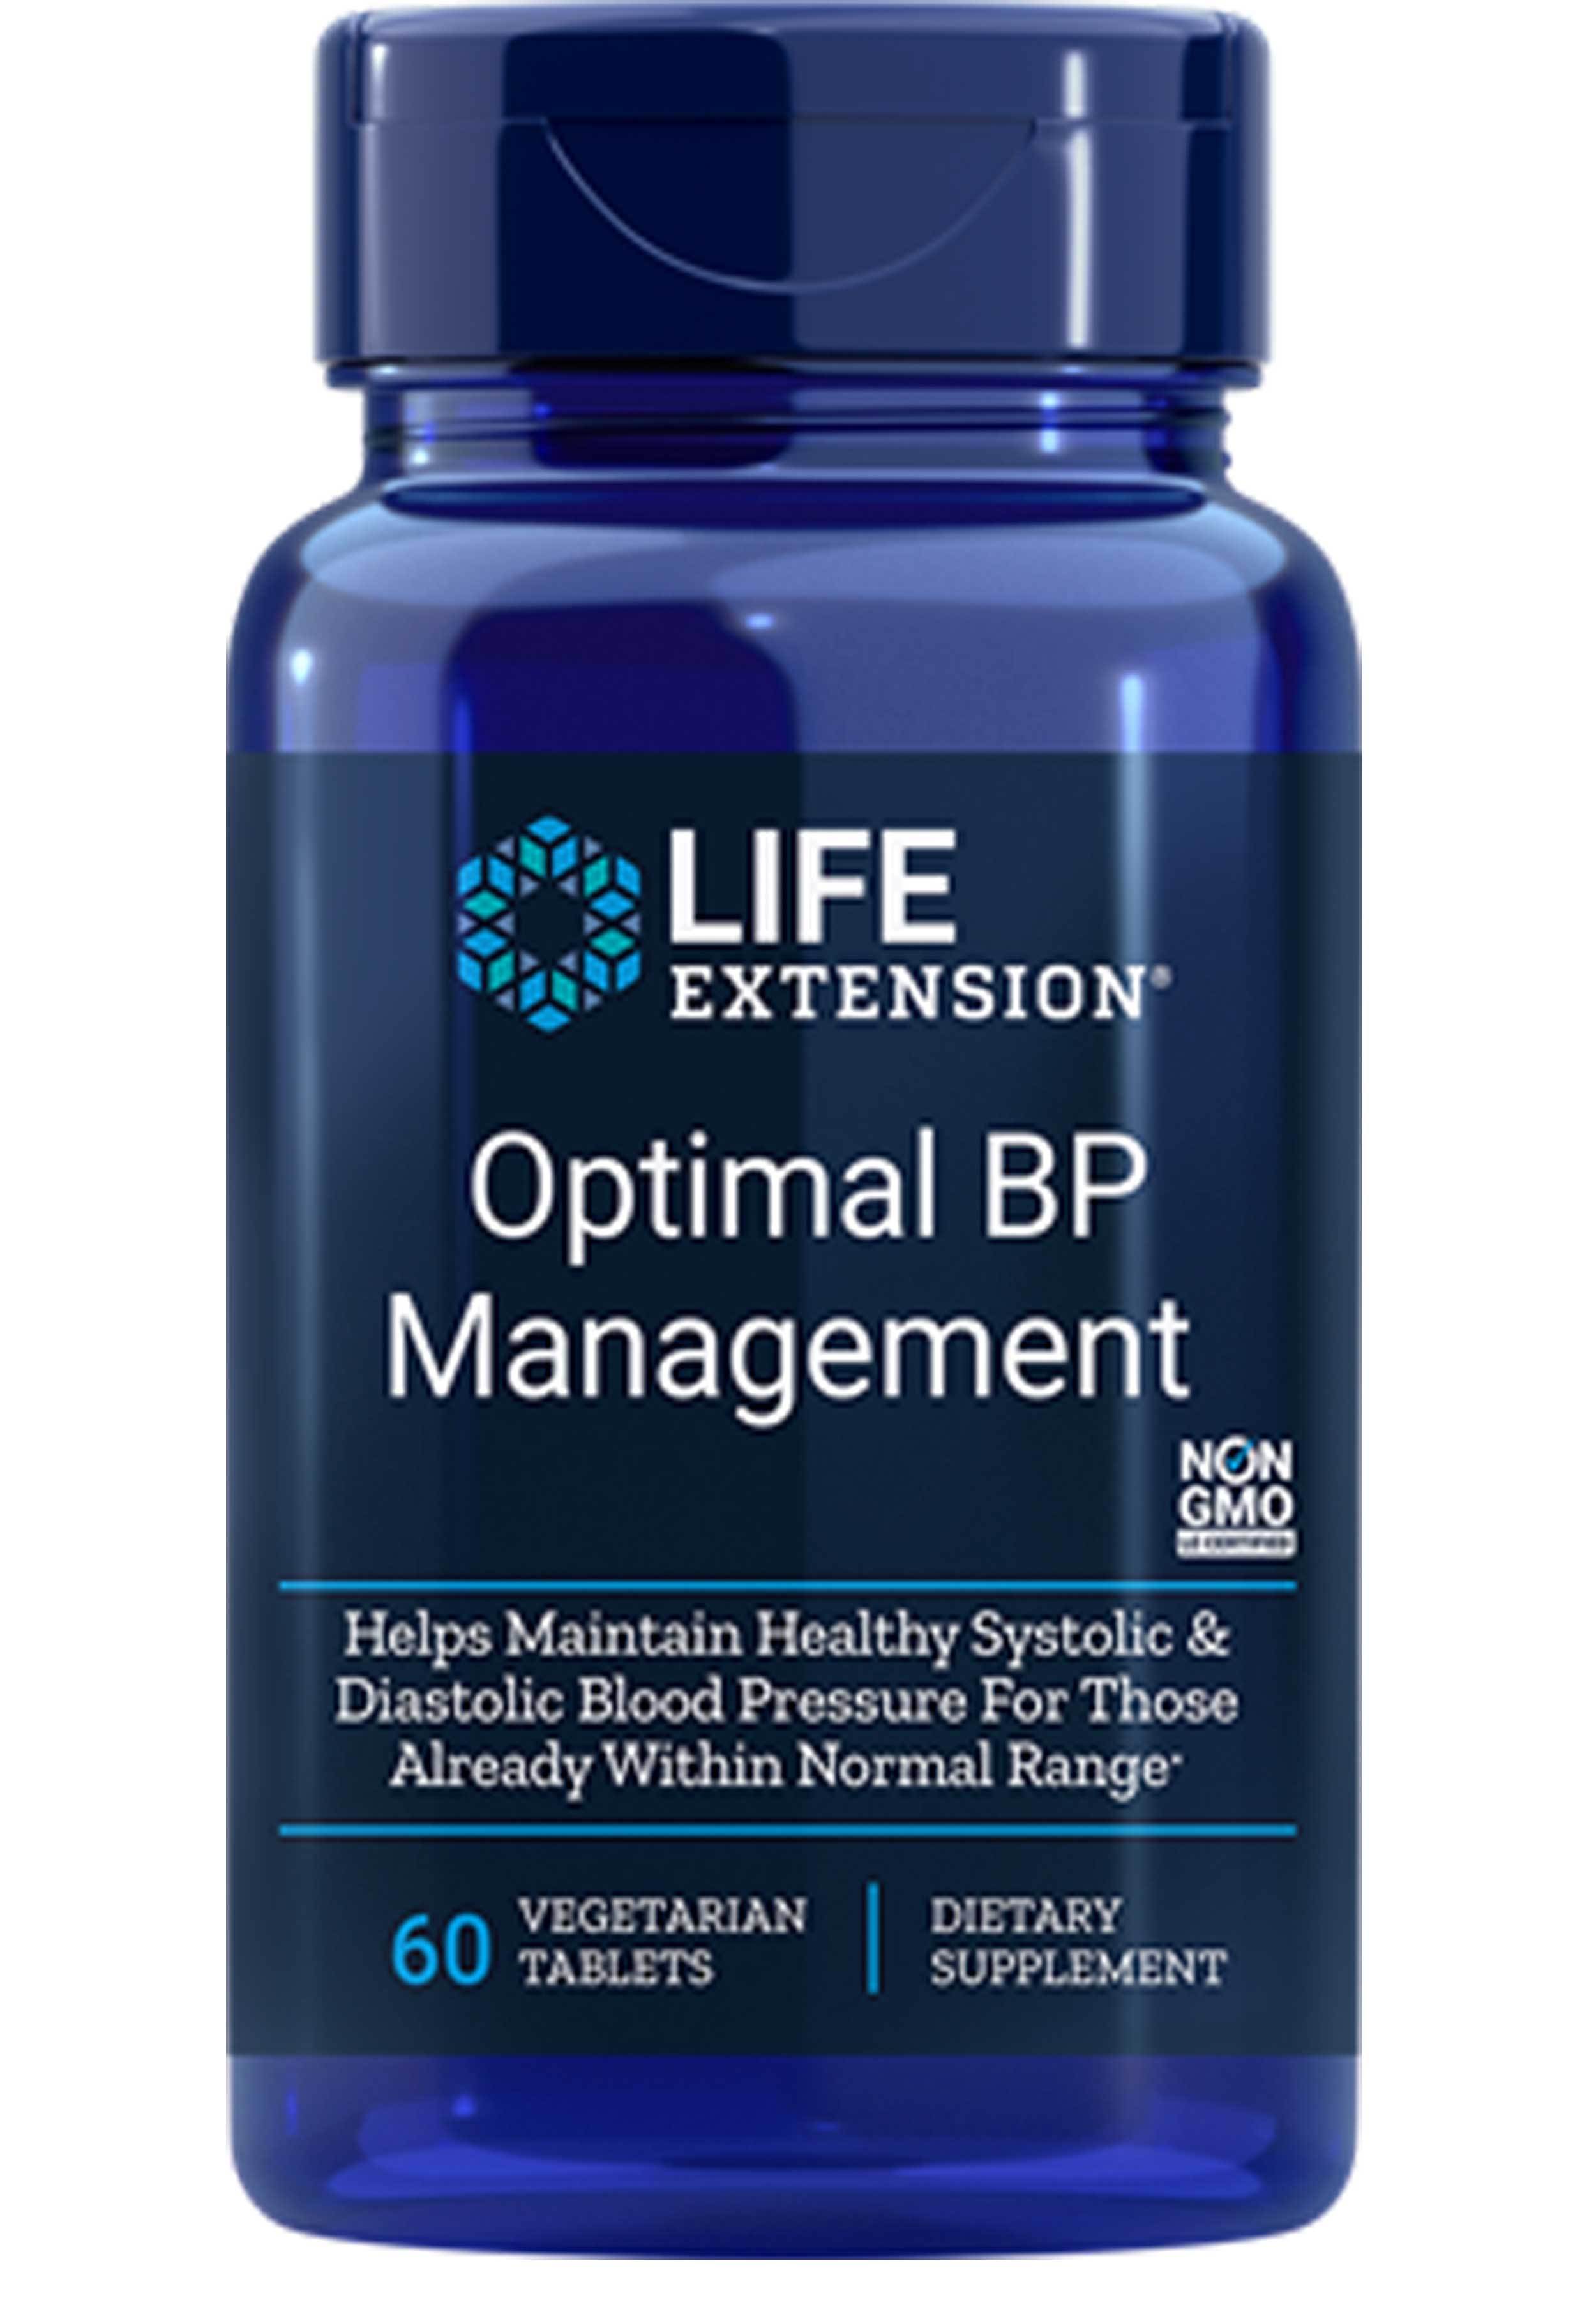 Life Extension Natural BP Management